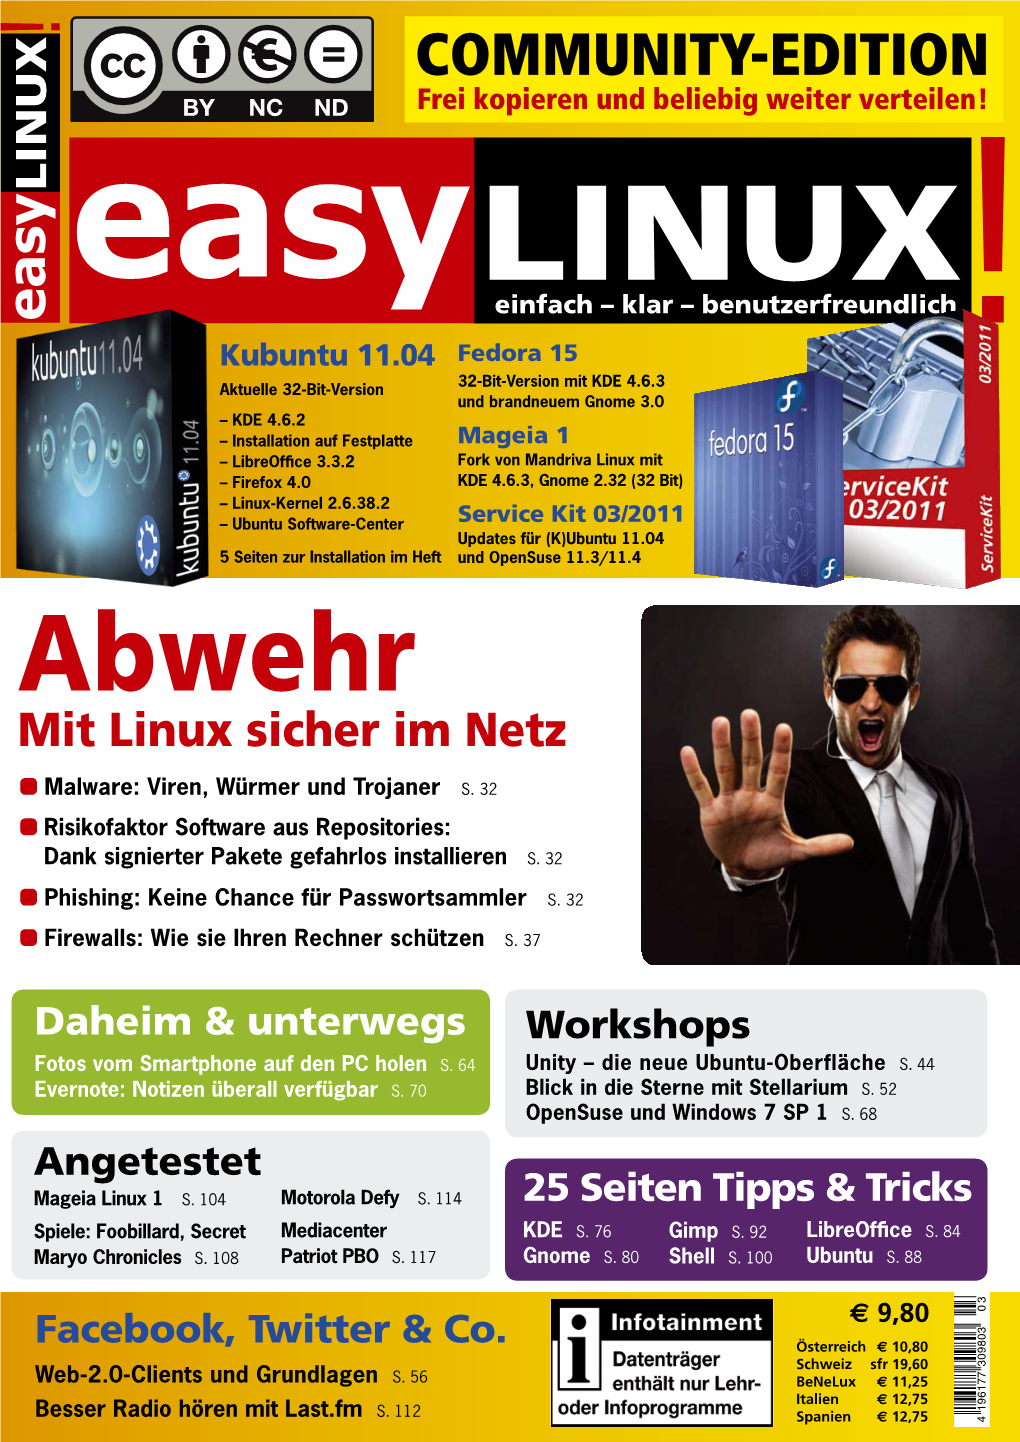 Easylinux Community Edition 03/2011